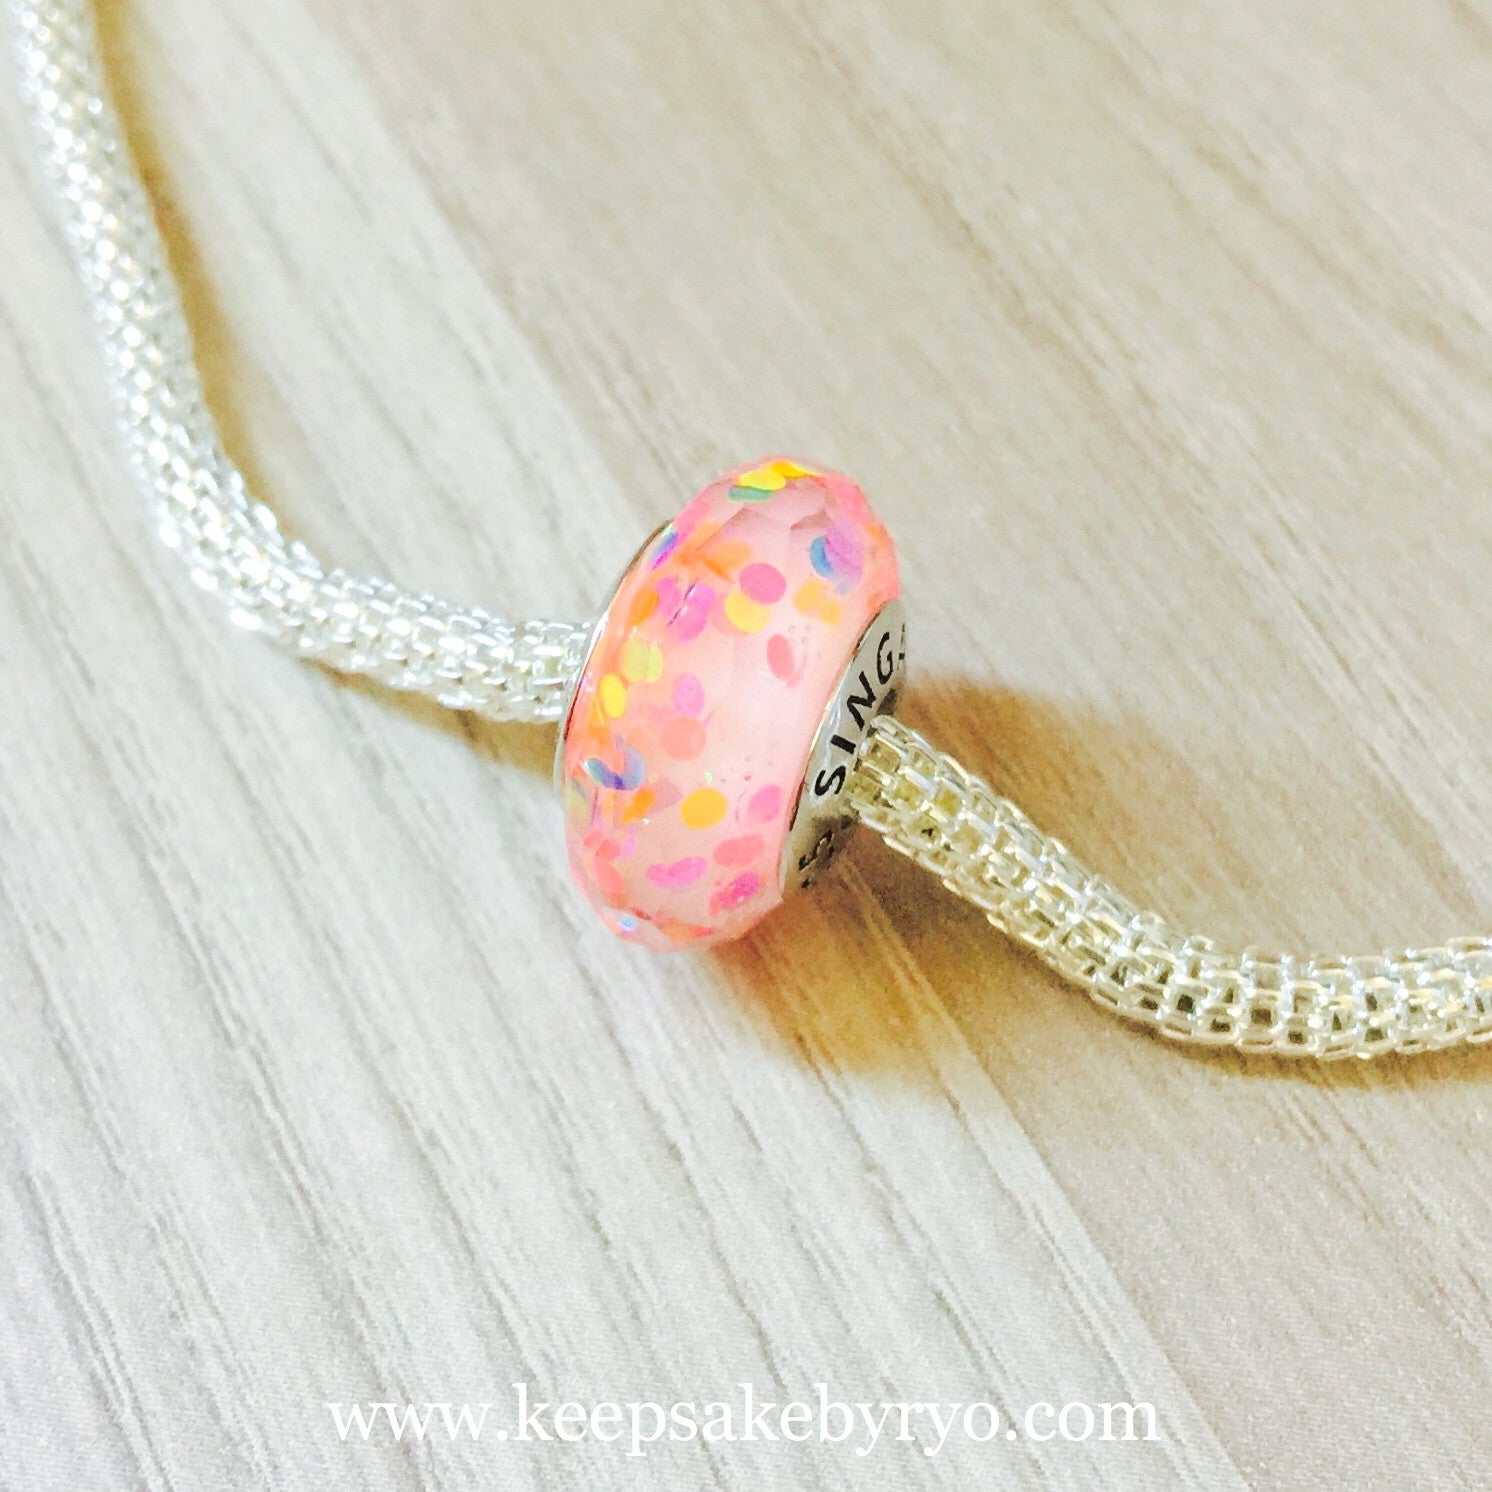 Shop CHARM IT! Gold Neon Bead Necklace